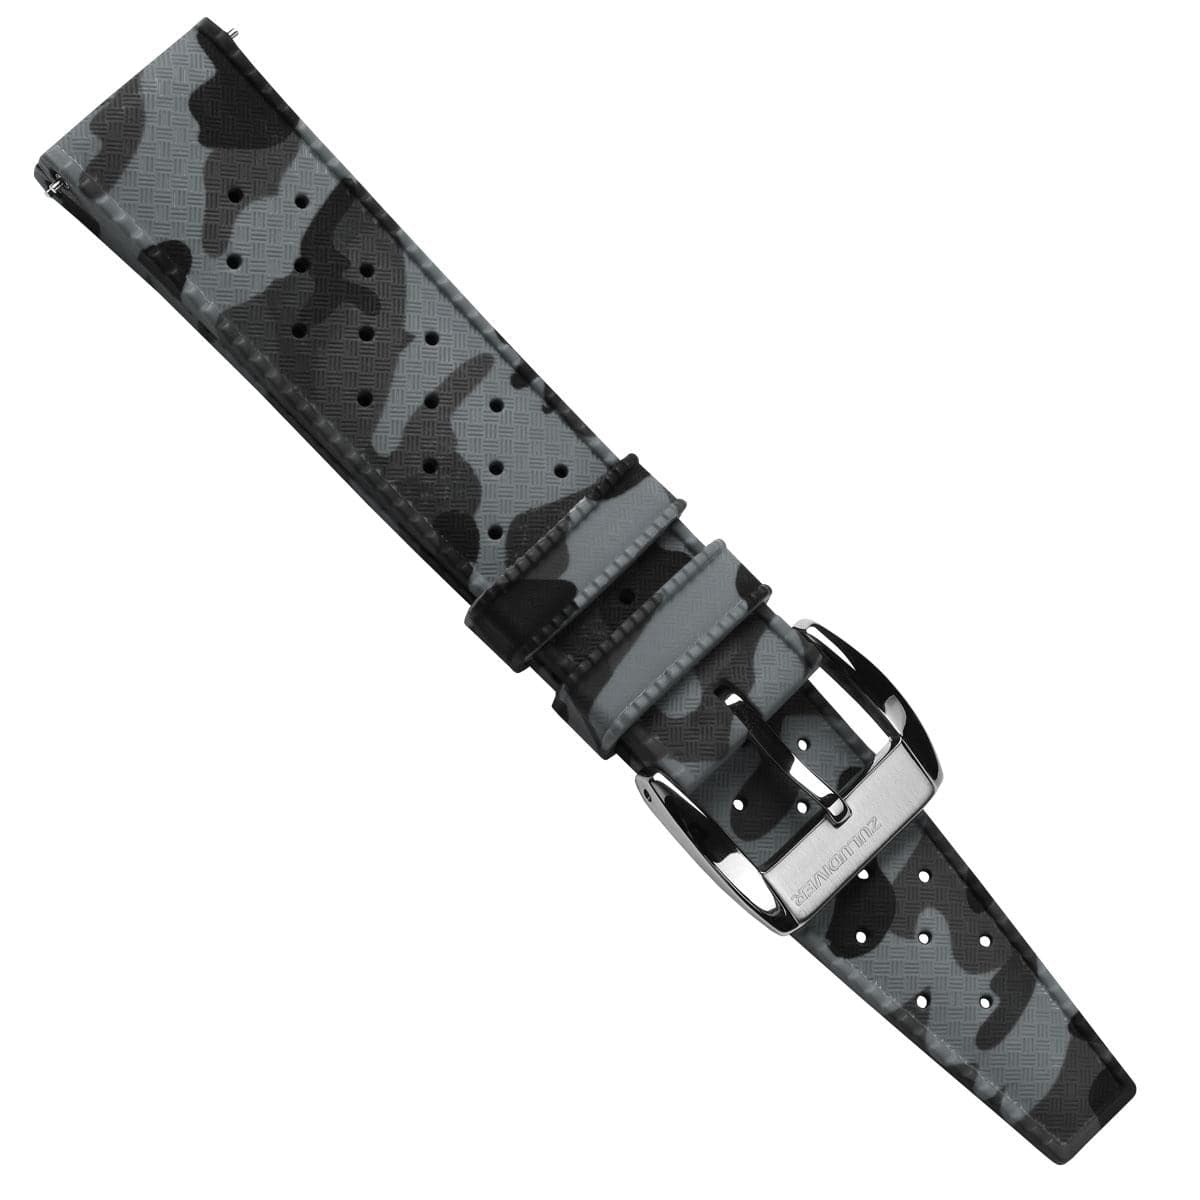 ZULUDIVER Tropic Style FKM Rubber Watch Strap - Camouflage Grey